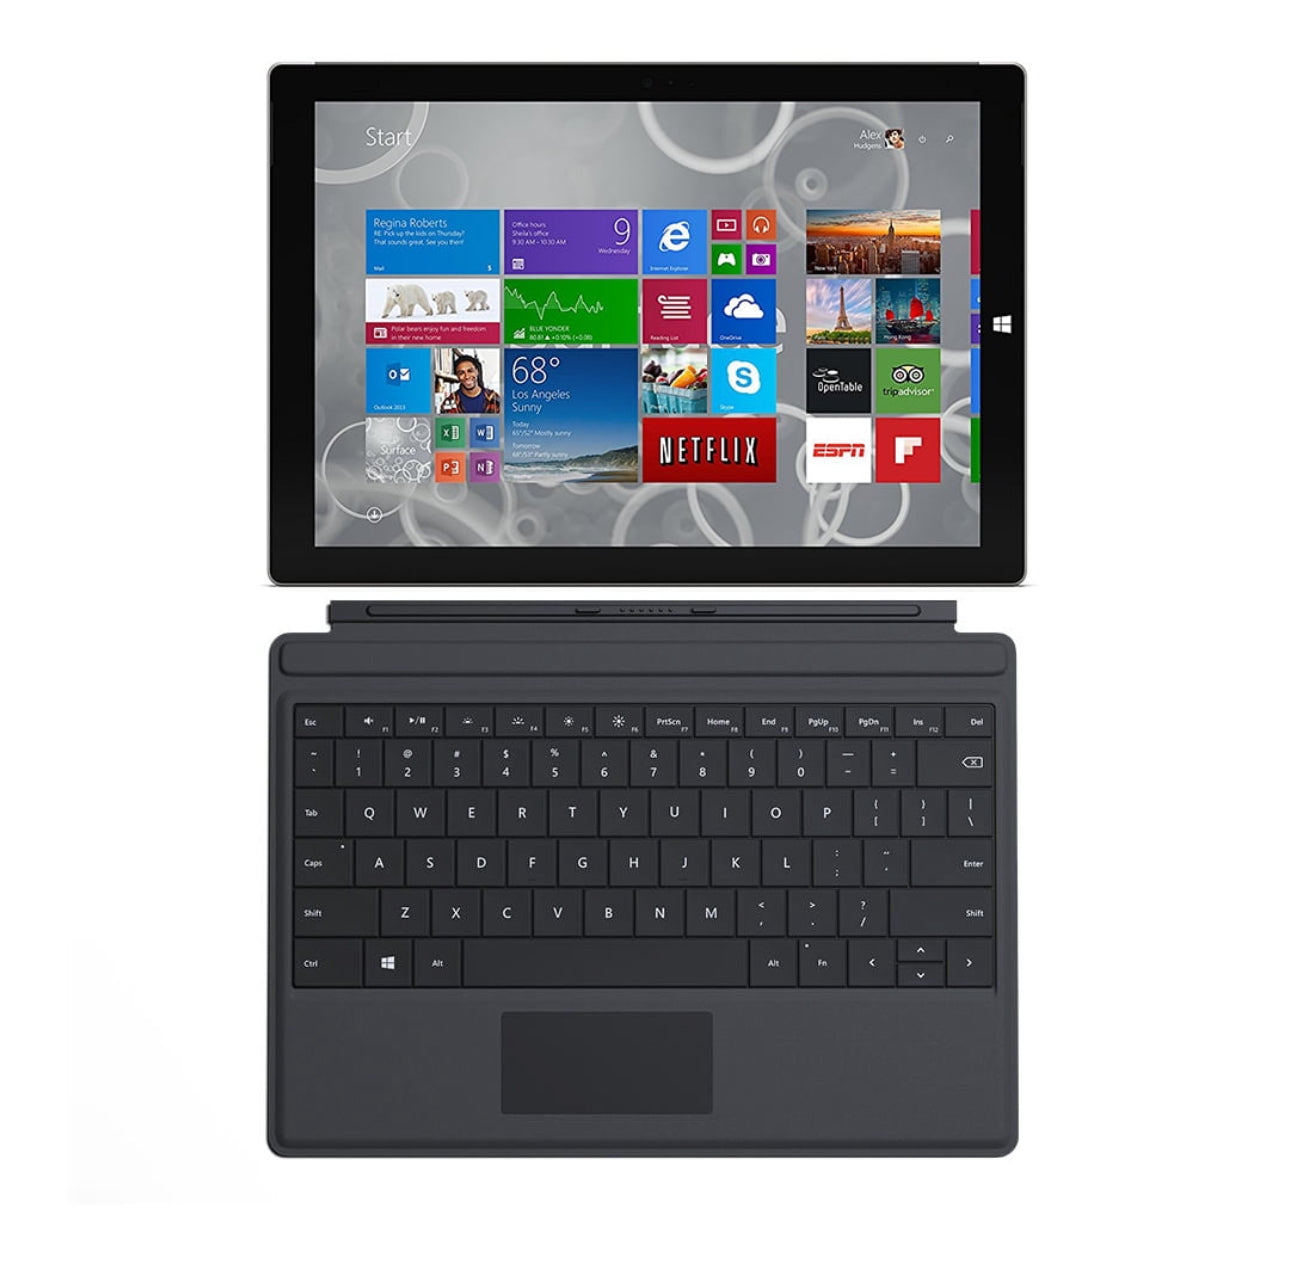 Surface Pro 3 12.3 inch (Intel Core i5 4300U, 8GB RAM, 256GB SSD) With Keyboard